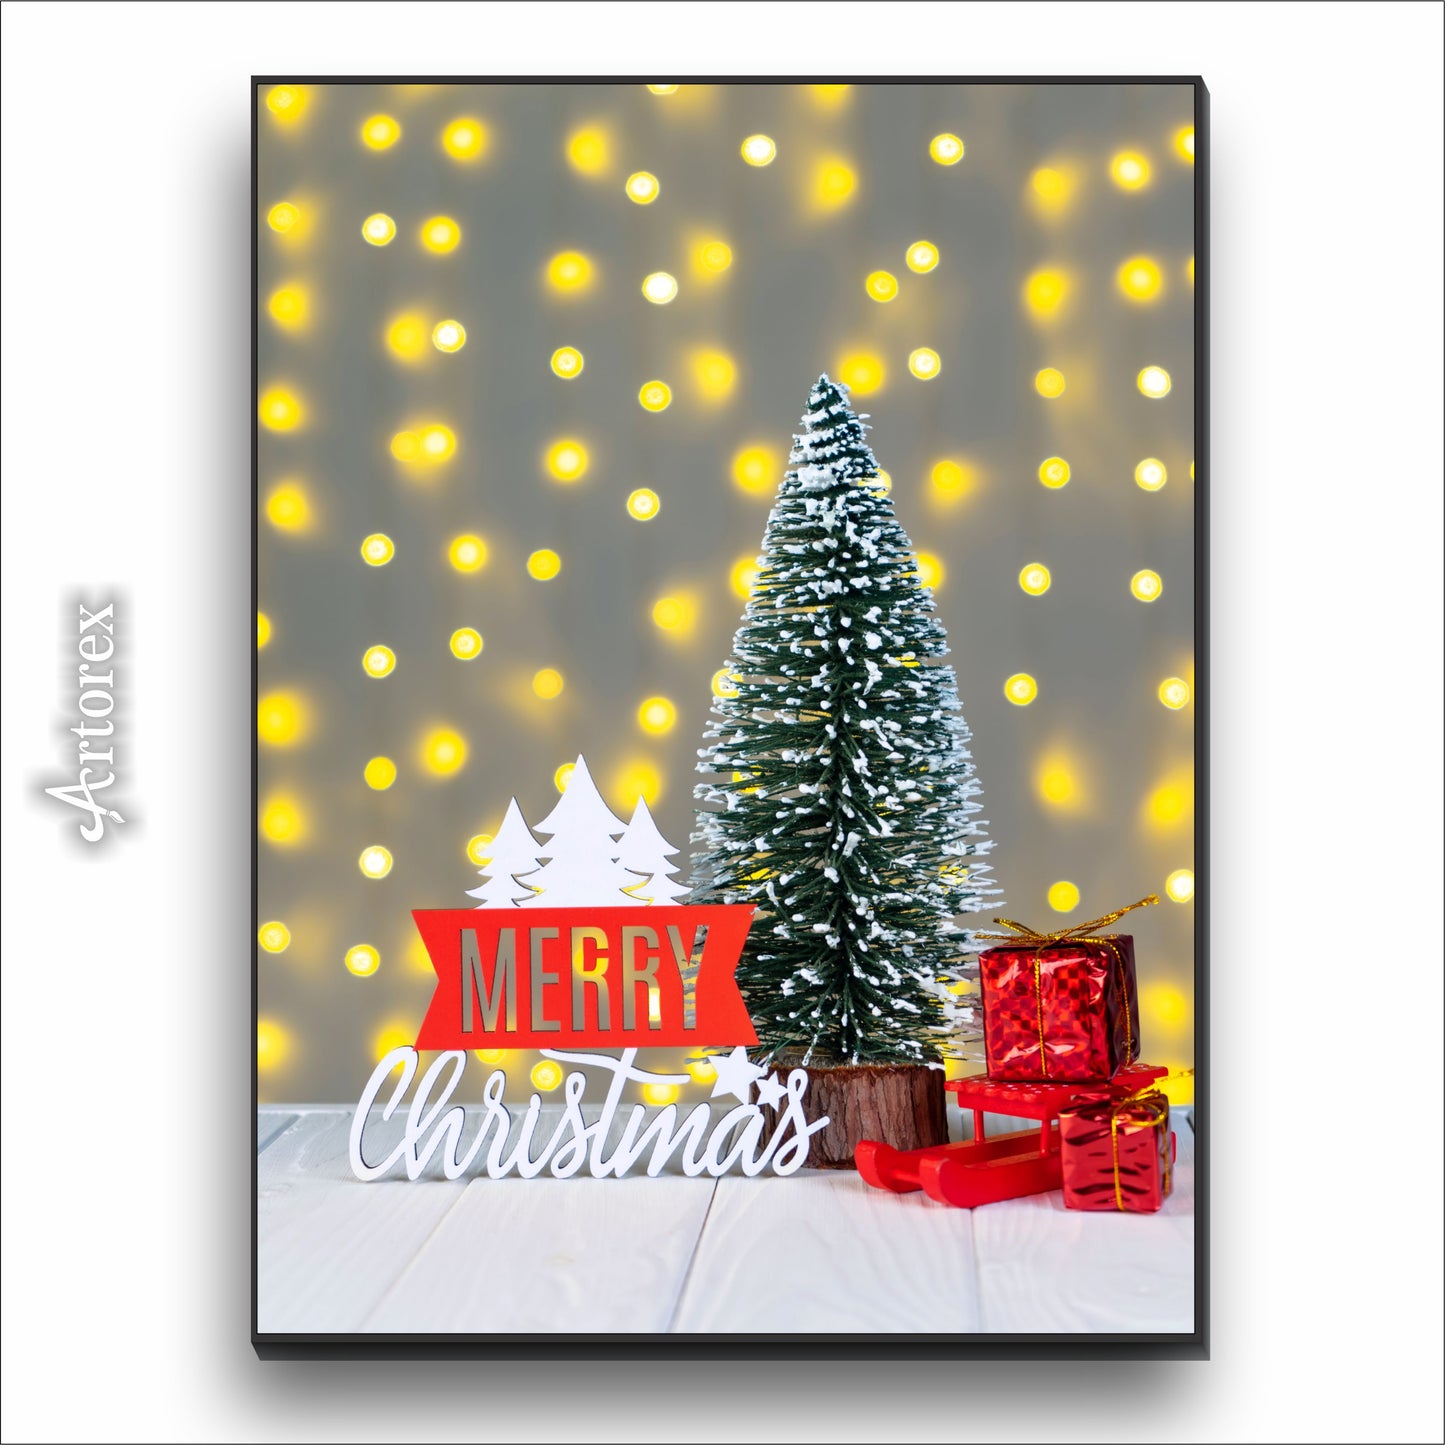 Merry Magic Christmas Tree Art